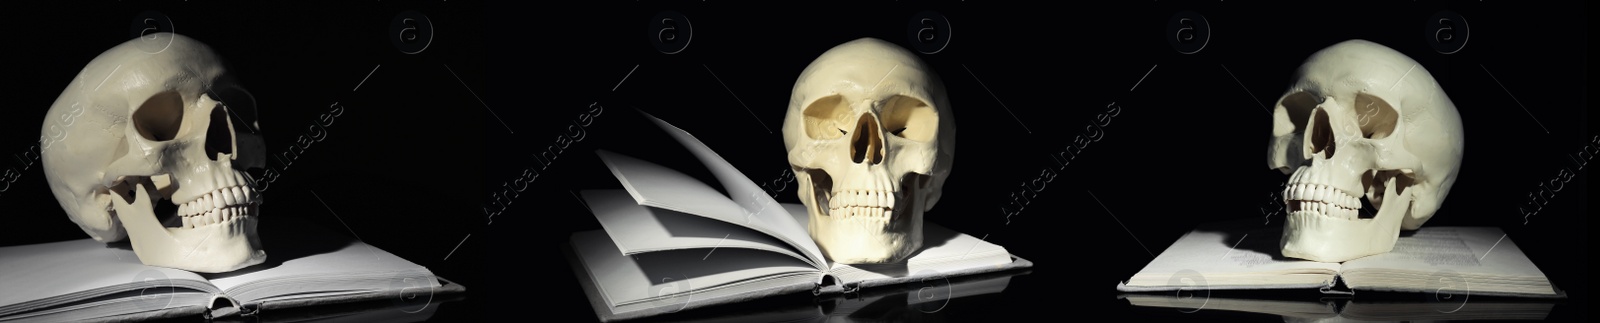 Image of Set with human skulls and books on black background. Banner design